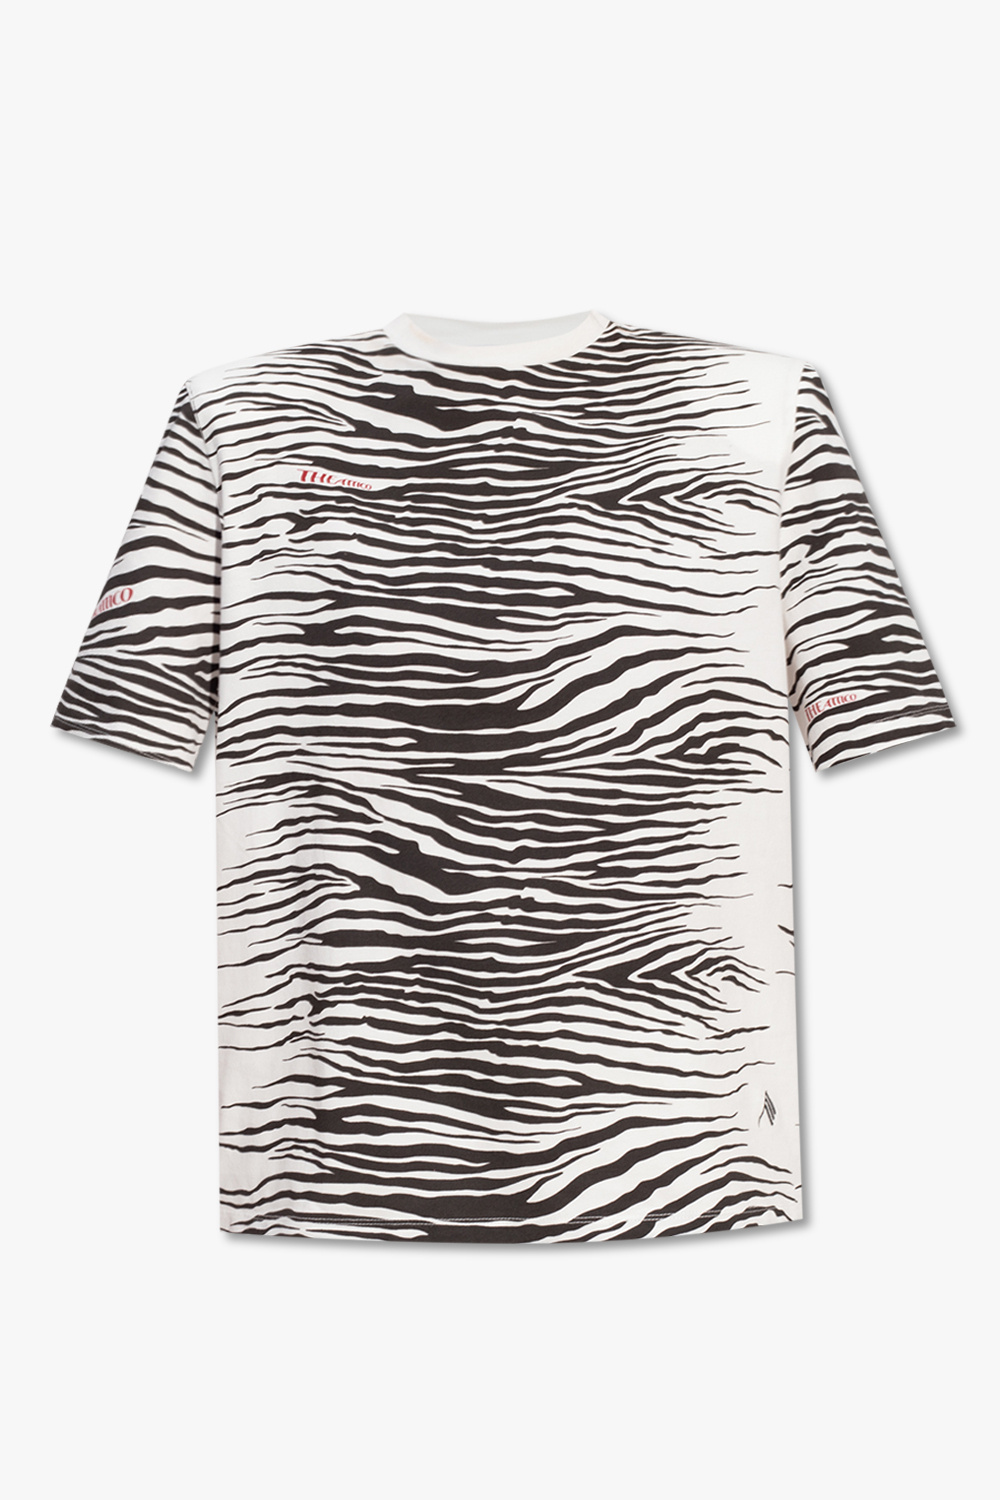 The Attico ‘Bella’ T-shirt Gap with animal pattern